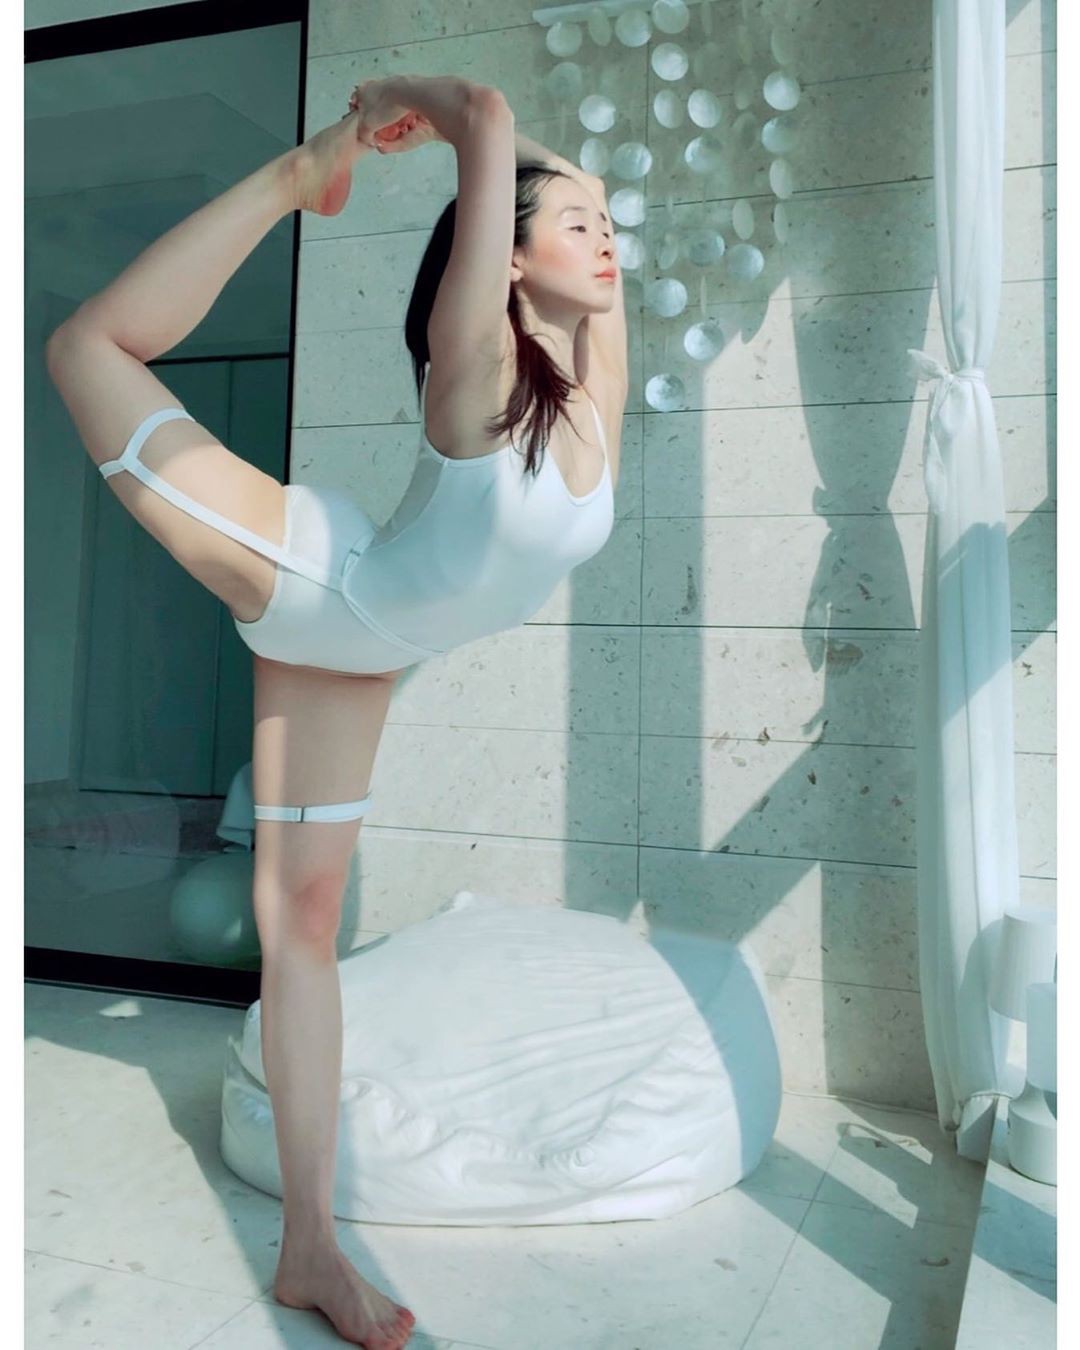 Sang A Yonini legs picture, ballet dancer, footwear: Sang A Yonini  